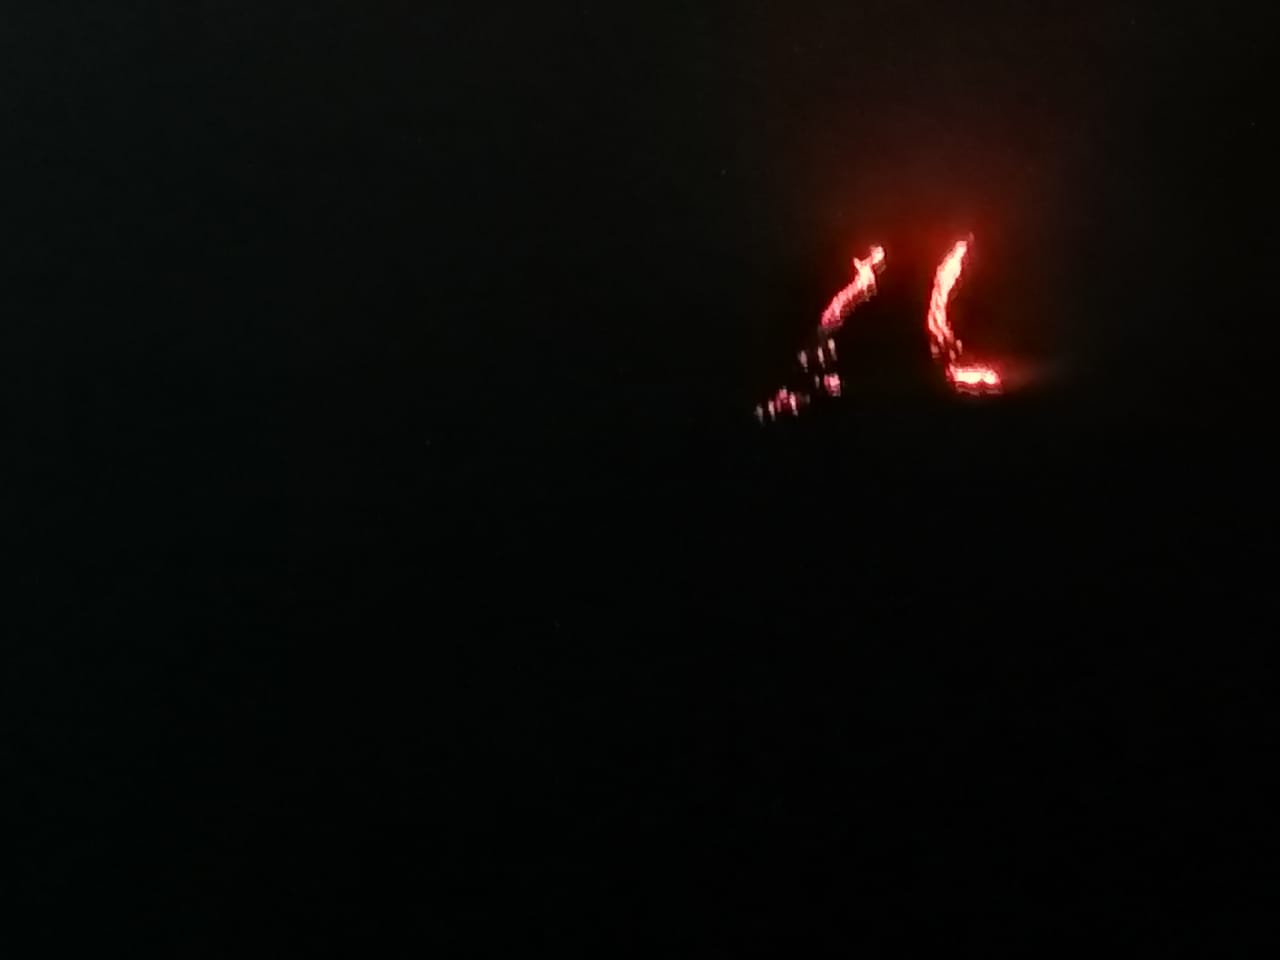 volcán Pacaya